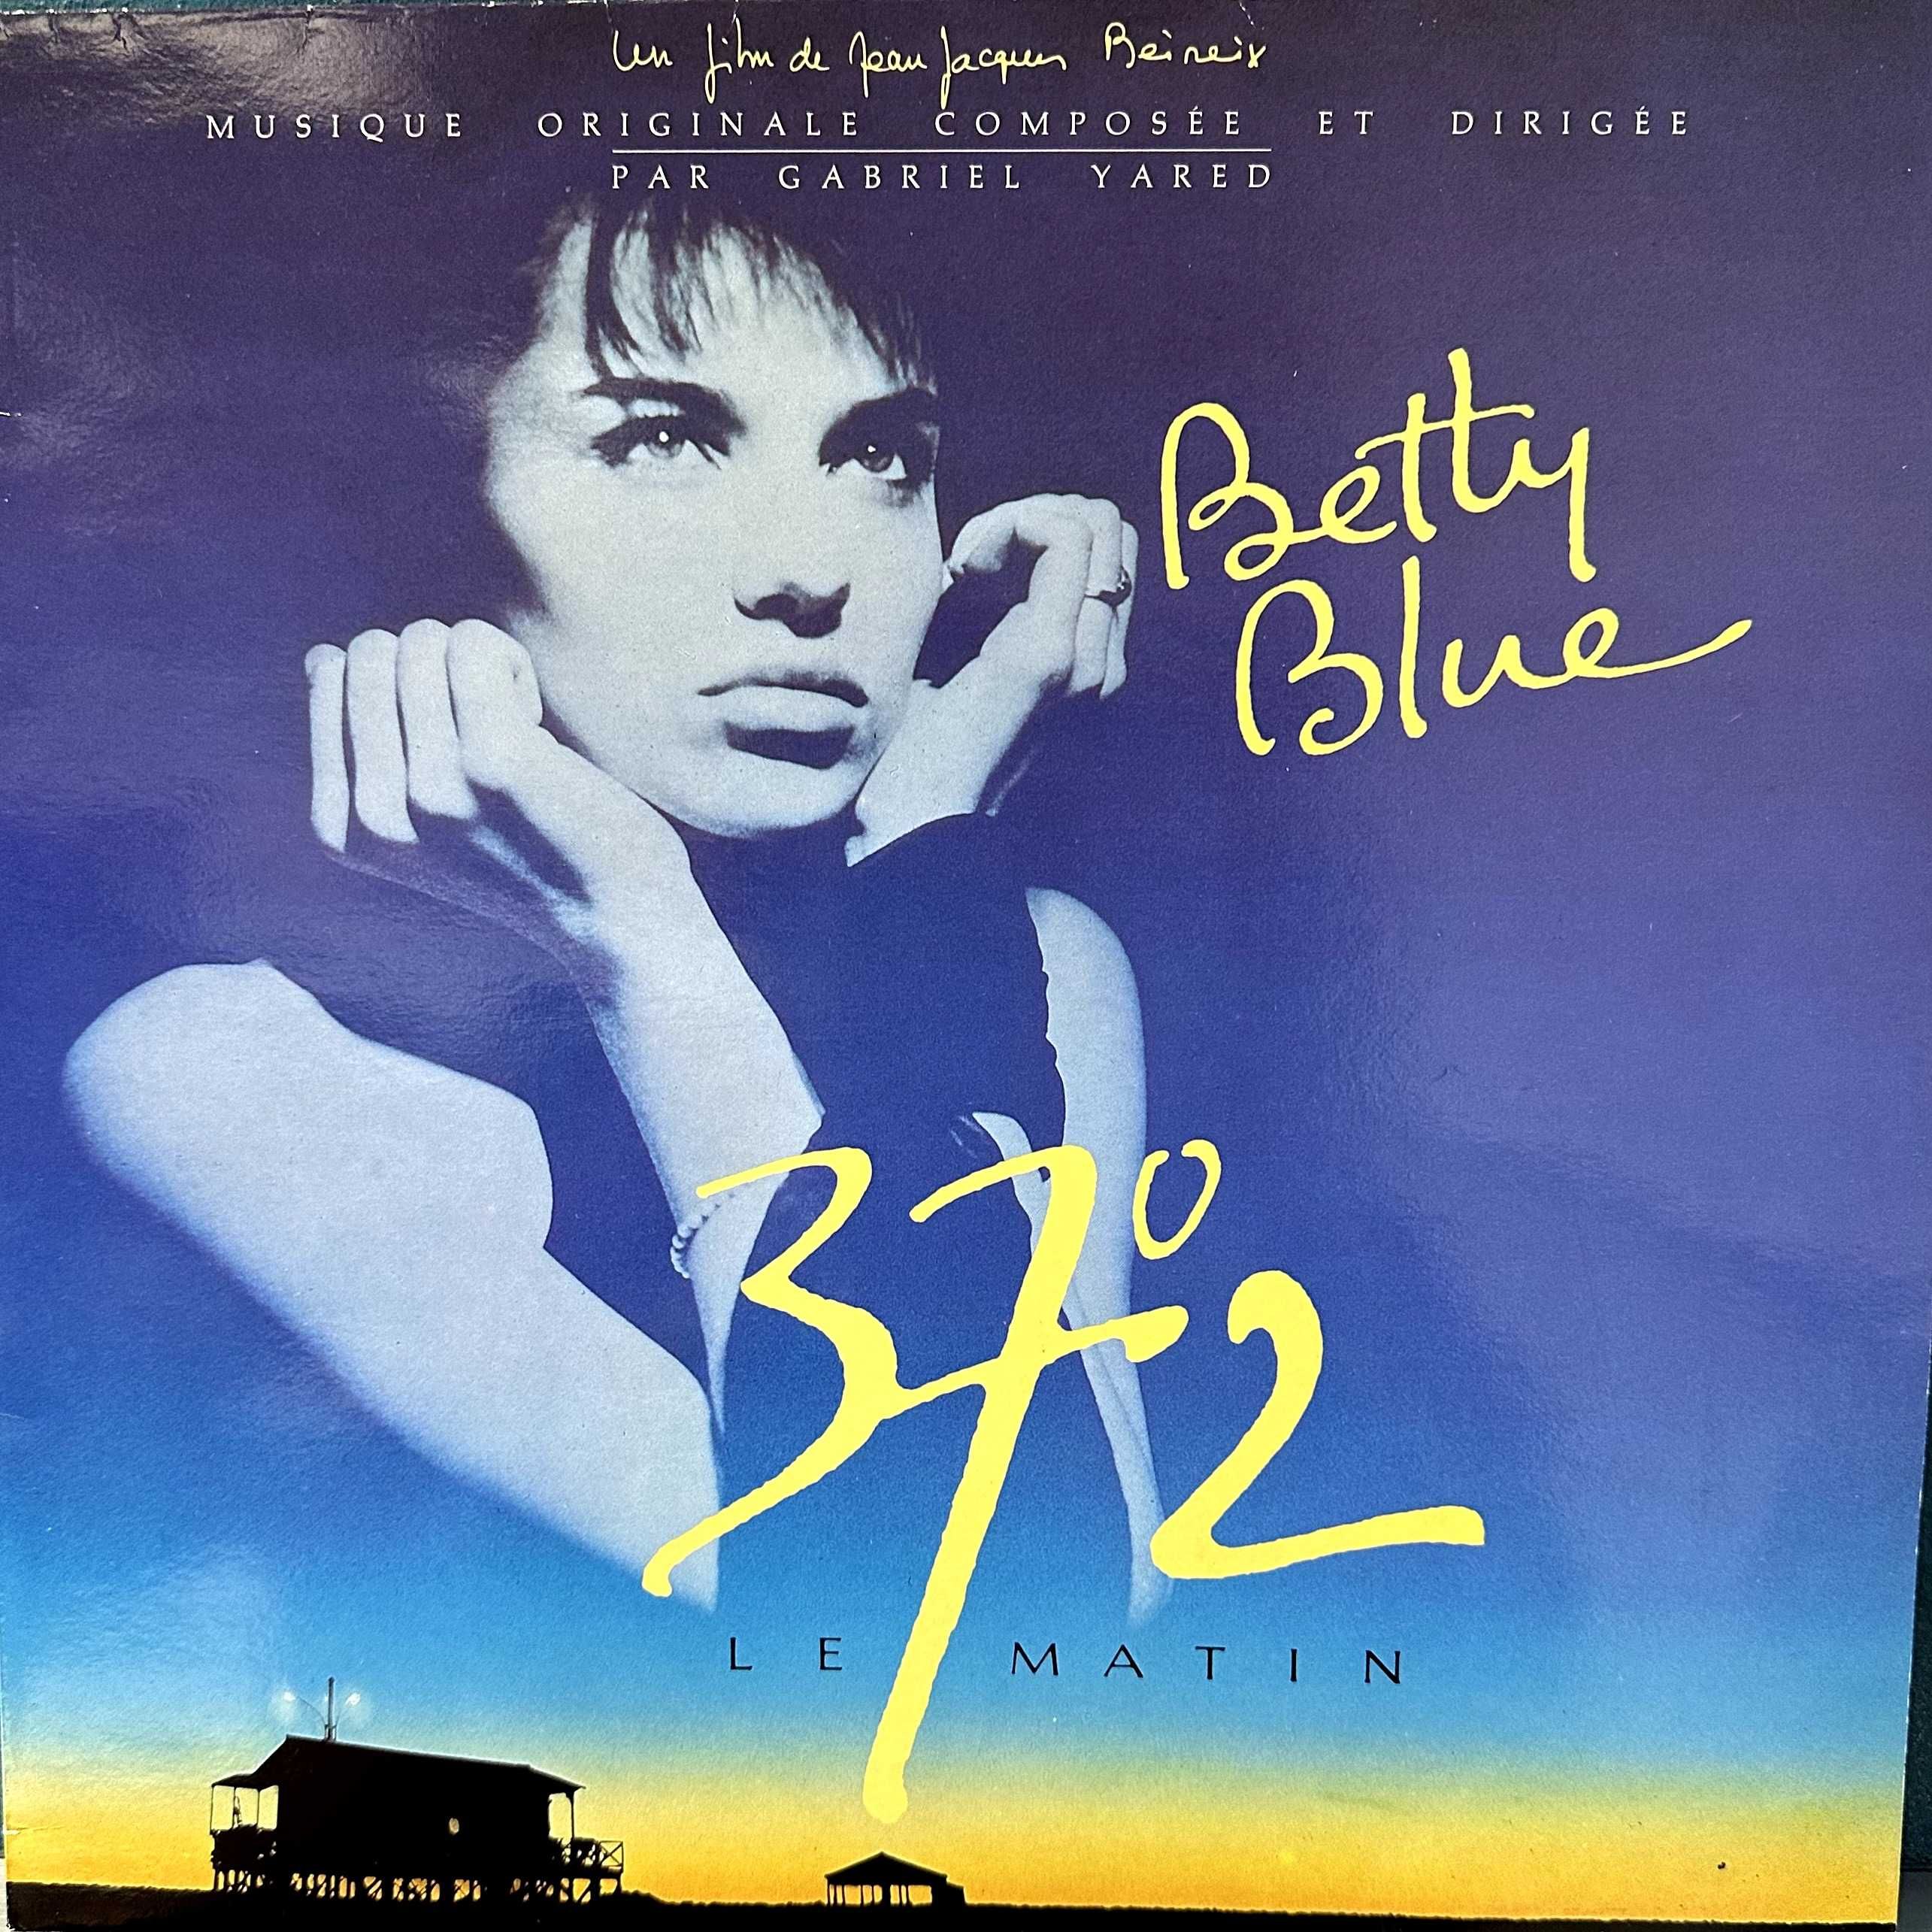 Gabriel Yared - Betty Blue (37*2 Le Matin) - Vinyl, 1986, UK